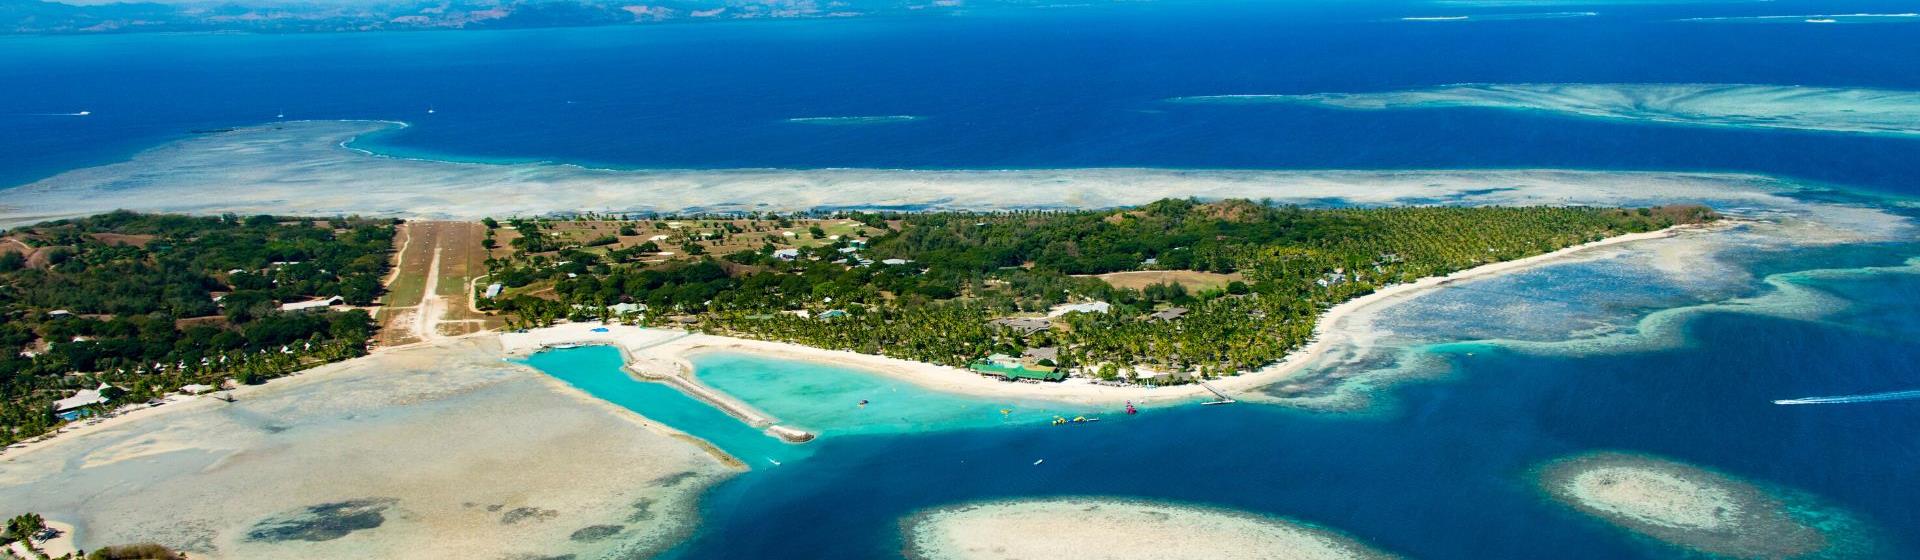 Holidays to the Fiji Islands